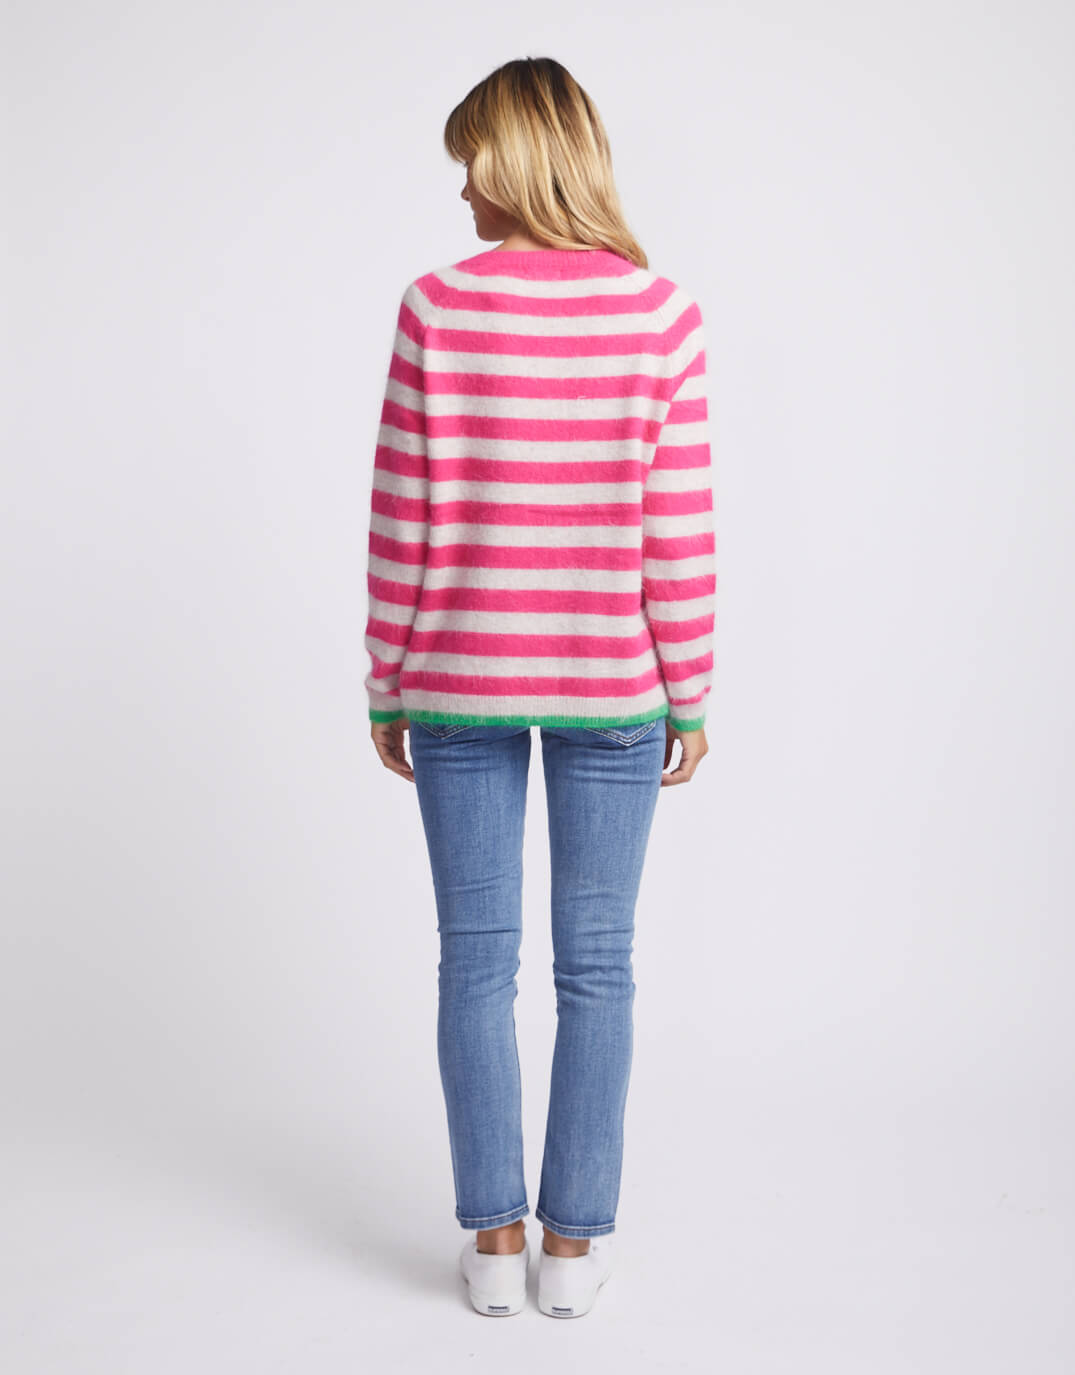 Colour Trim Stripe V Neck Sweater - Pink/Oatmeal/Green Trim